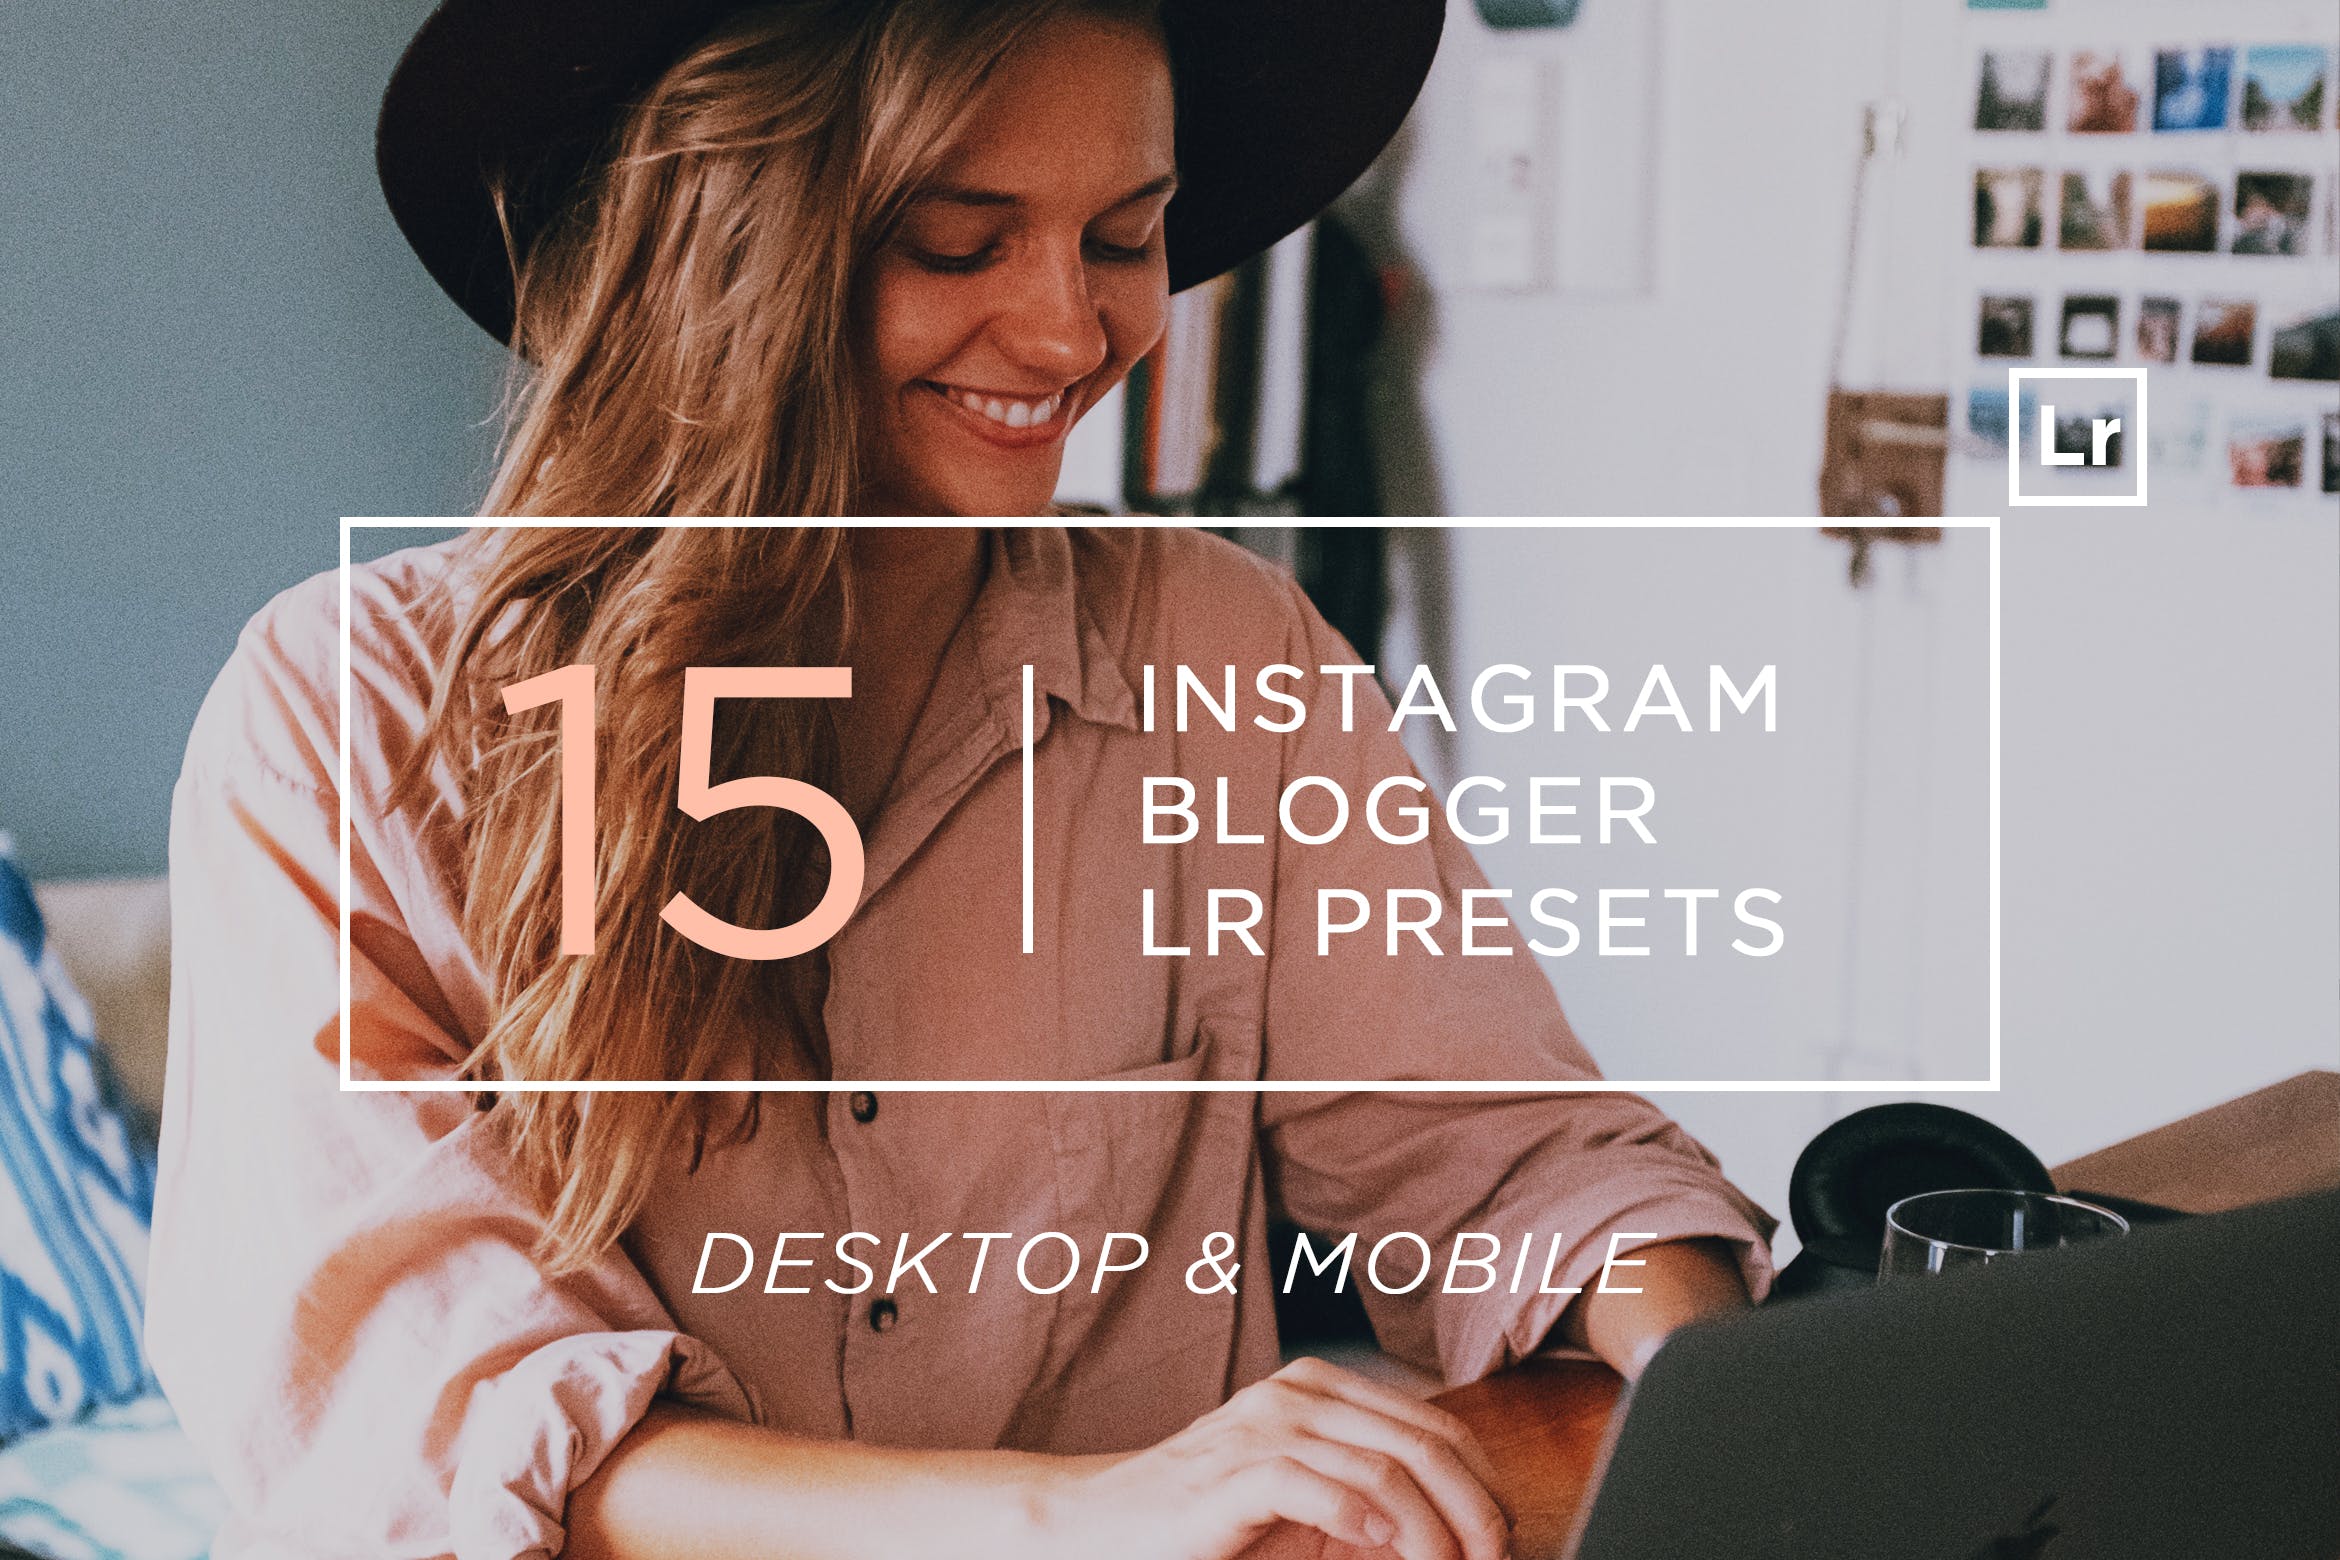 15款Instagram/Blogger照片贴图调色处理素材库精选LR预设 15 Instagram Blogger Lightroom Presets + Mobile插图